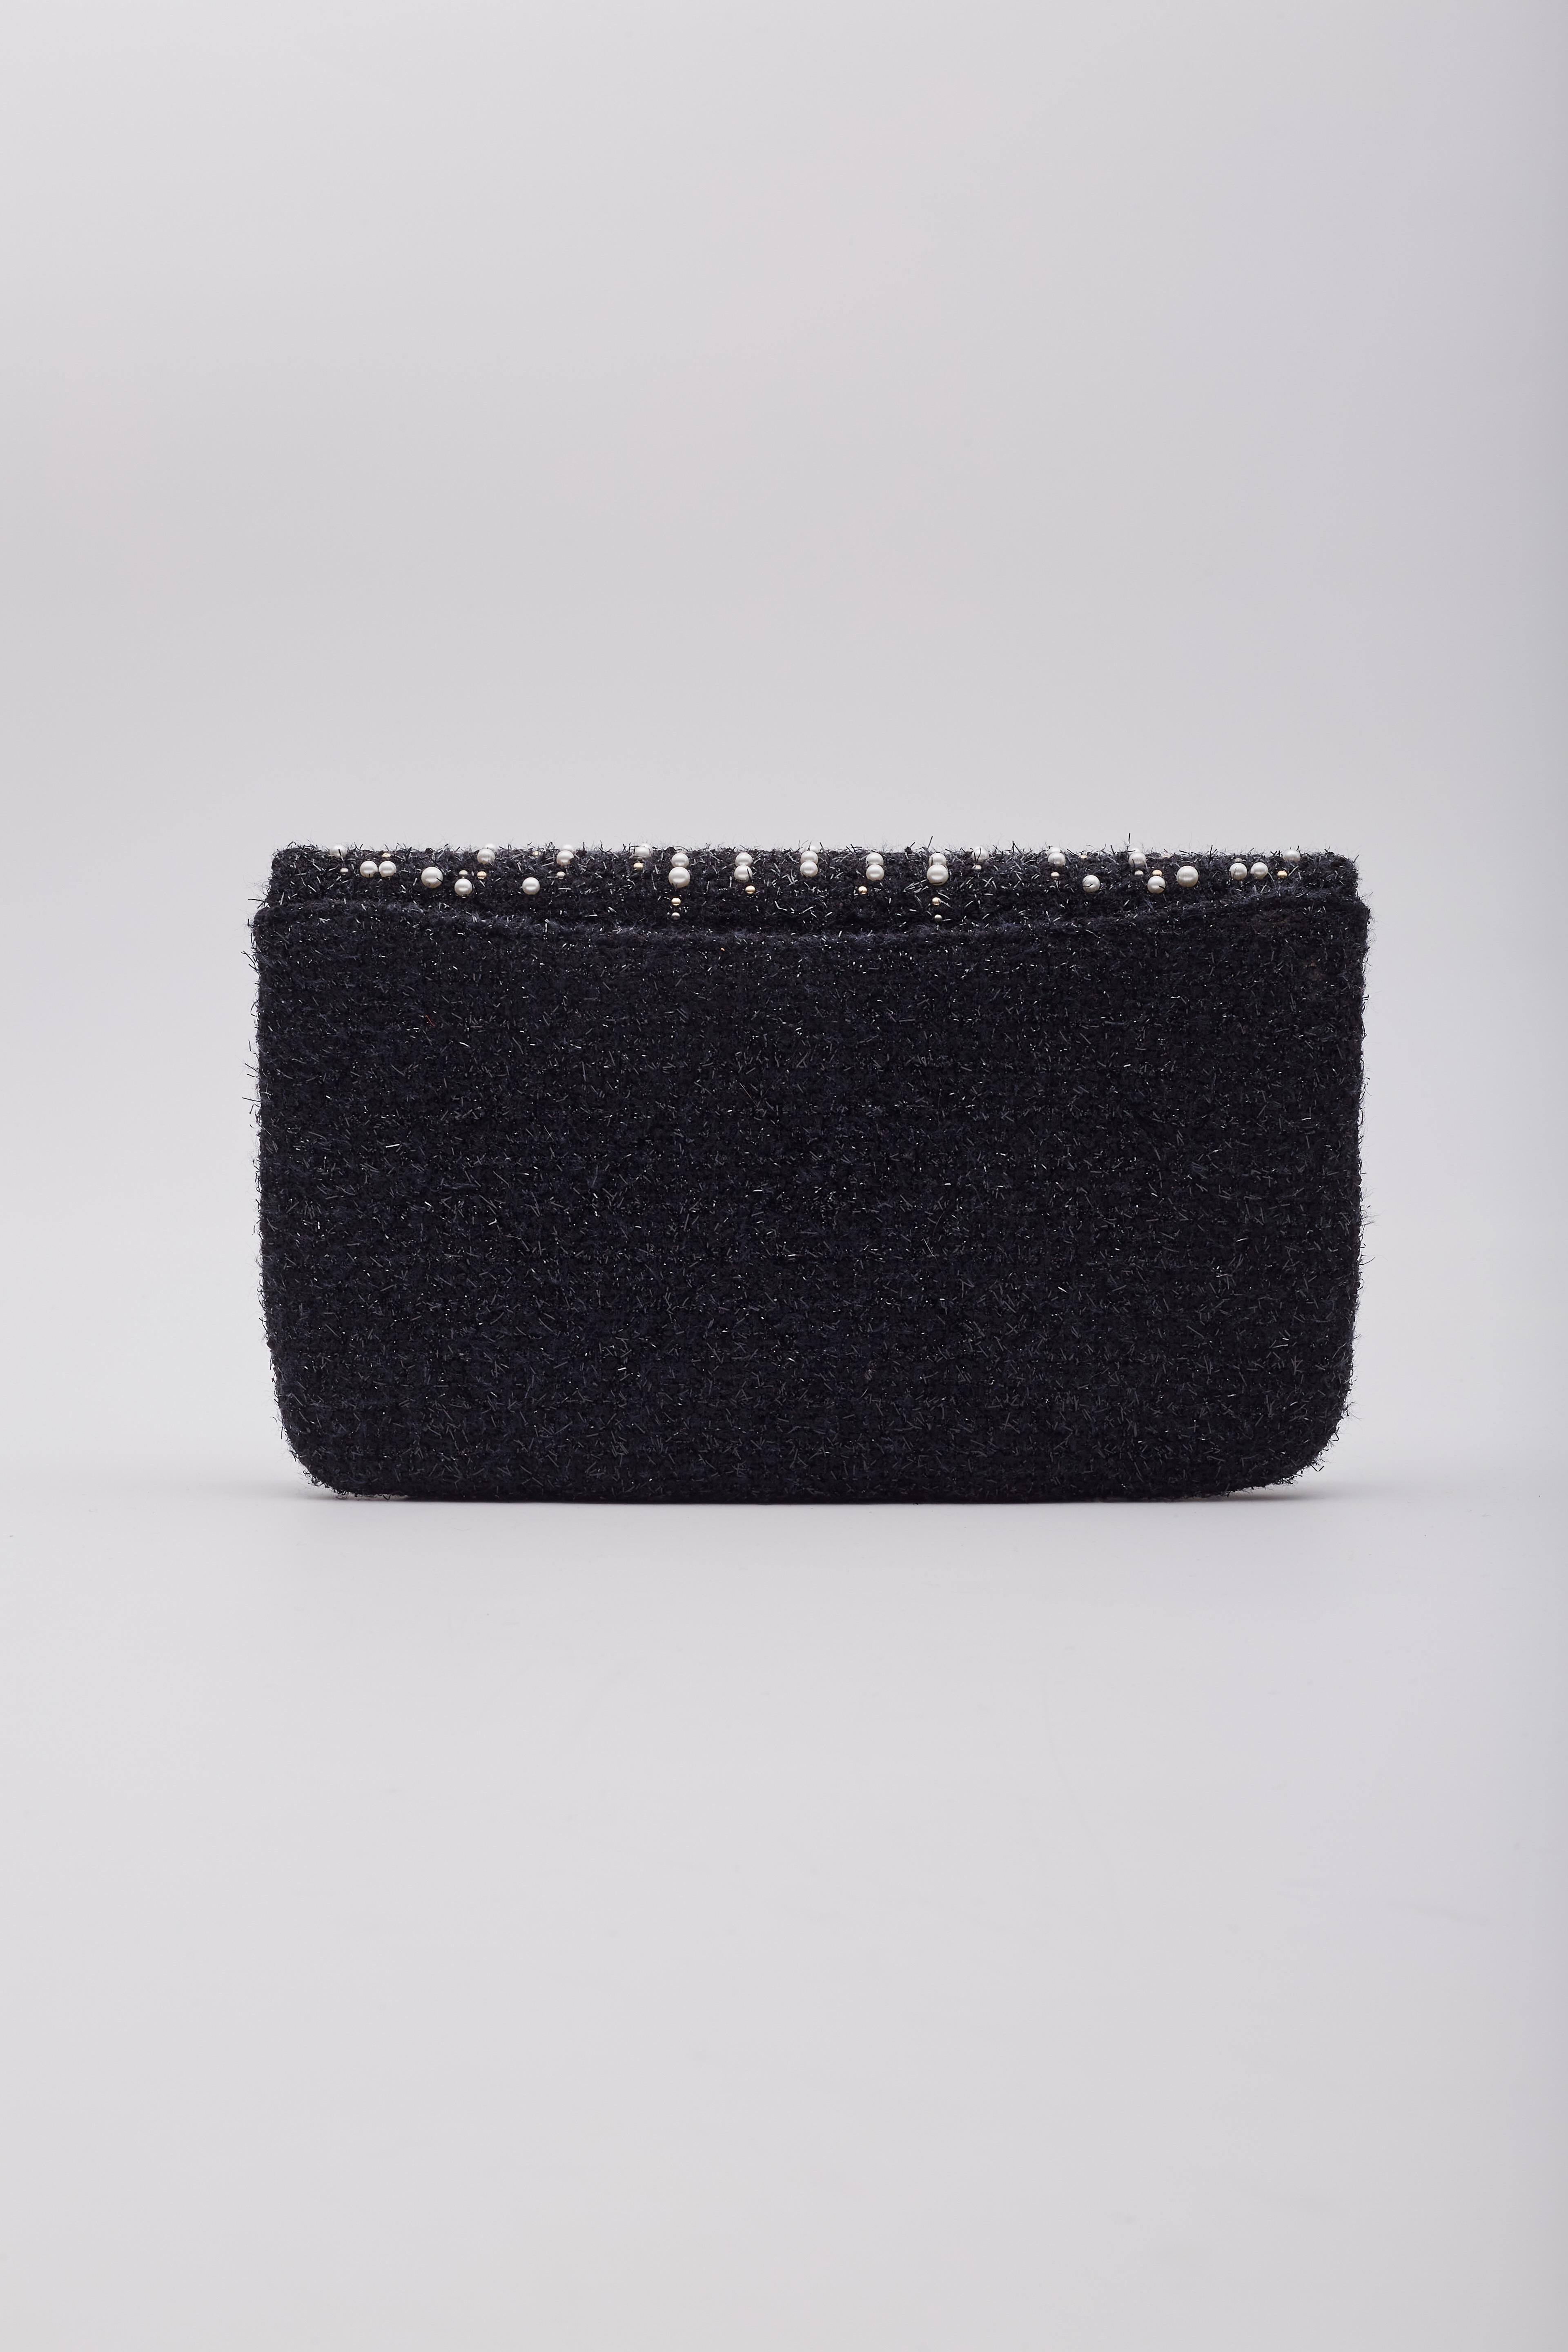 Chanel Paris Cosmopolite Pearl Fantasy Tweed Flap Clutch Bag For Sale 3